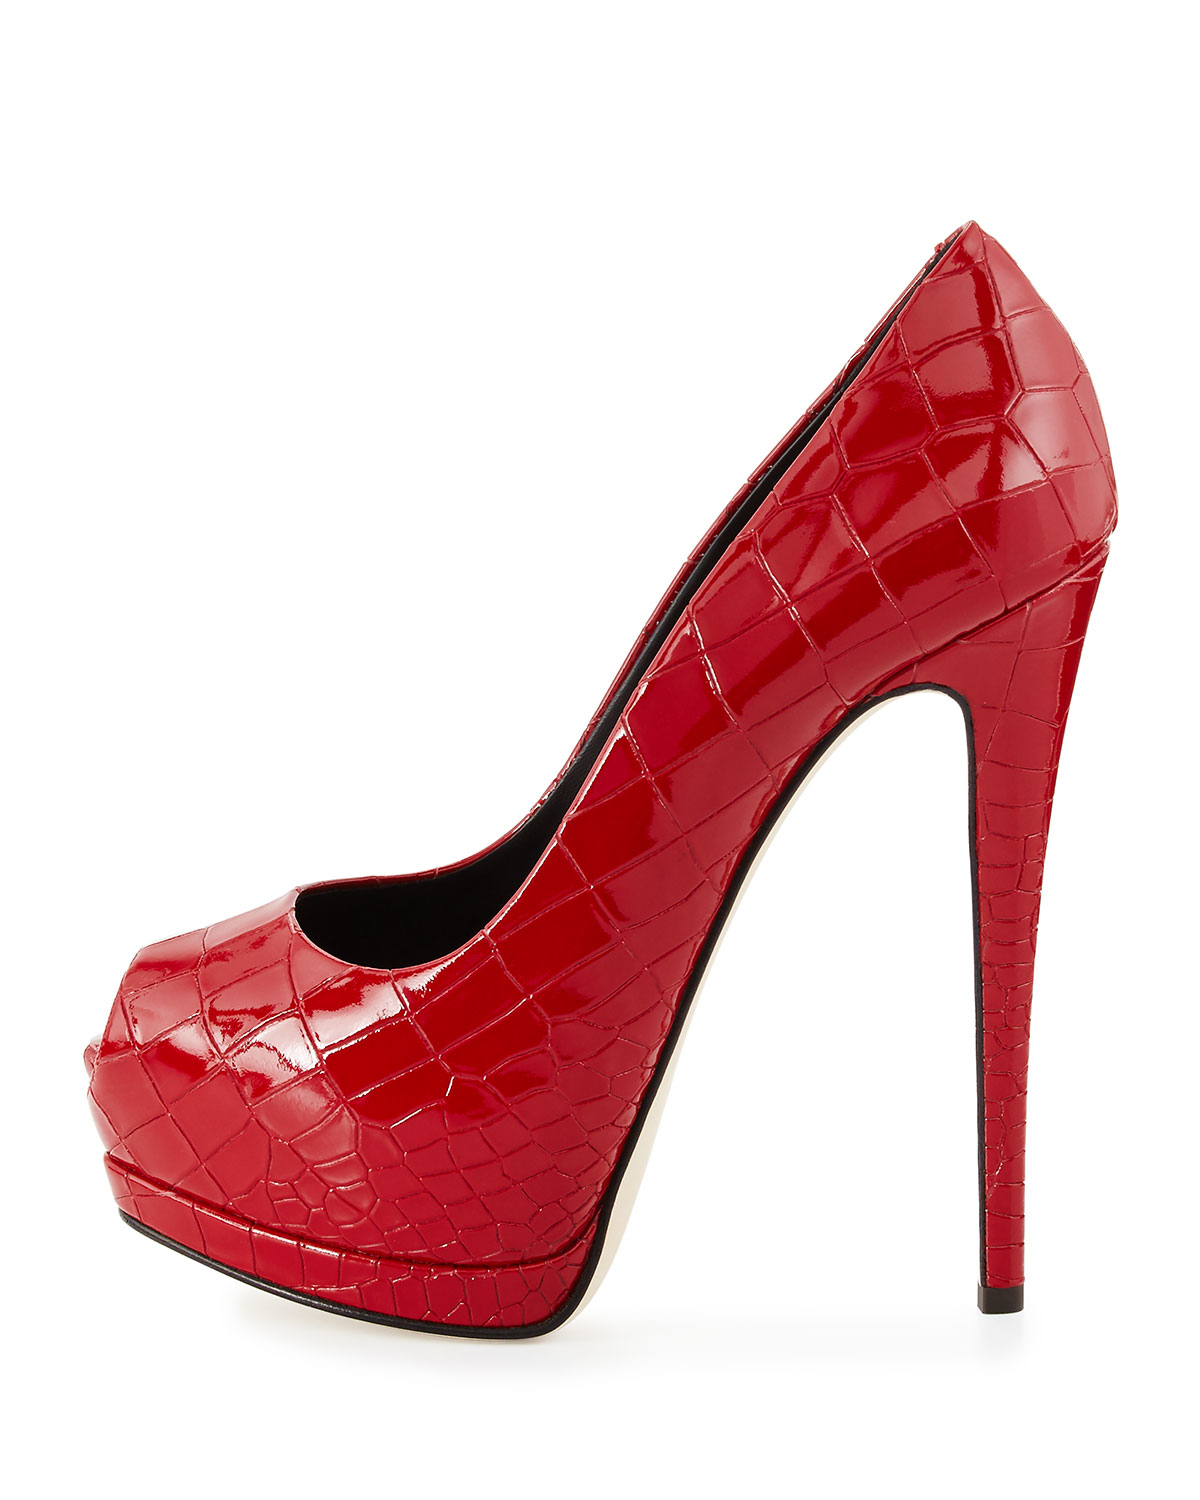 Lyst - Giuseppe Zanotti Red Croc-embossed Patent Leather 'sharon' Peep ...